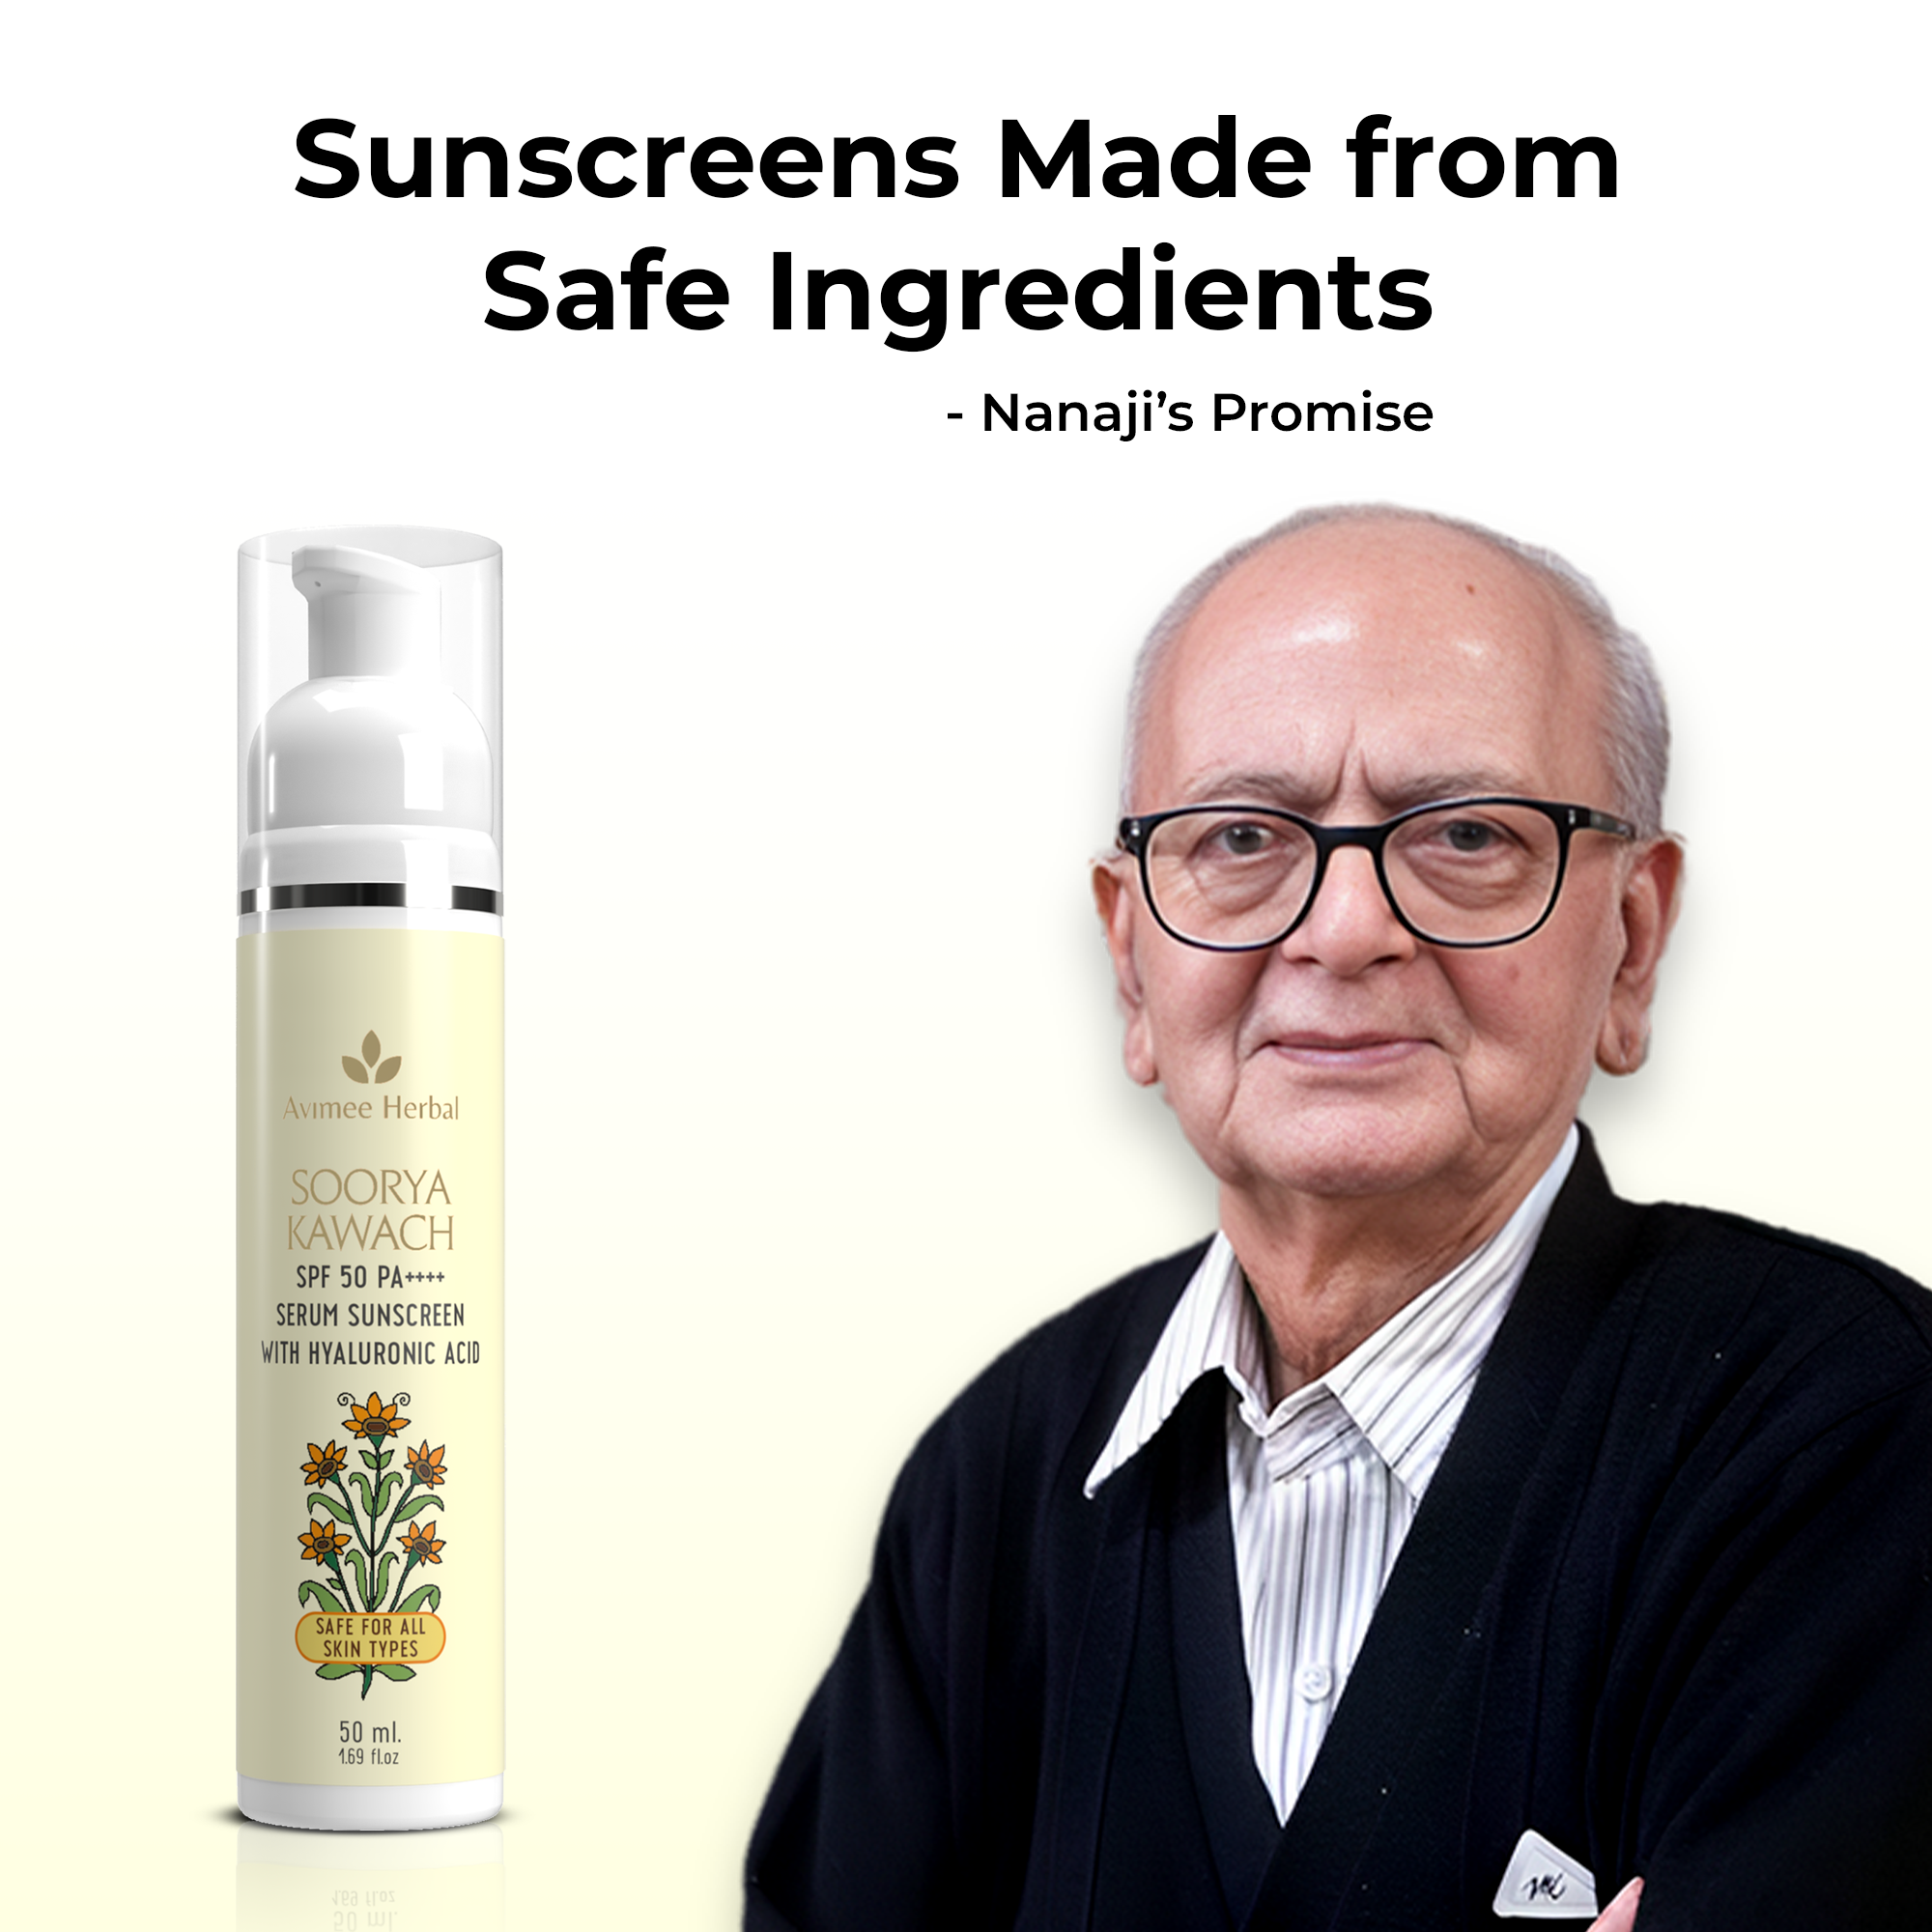 Soorya Kawach SPF 50 PA++++ Hyaluronic Acid Serum Sunscreen